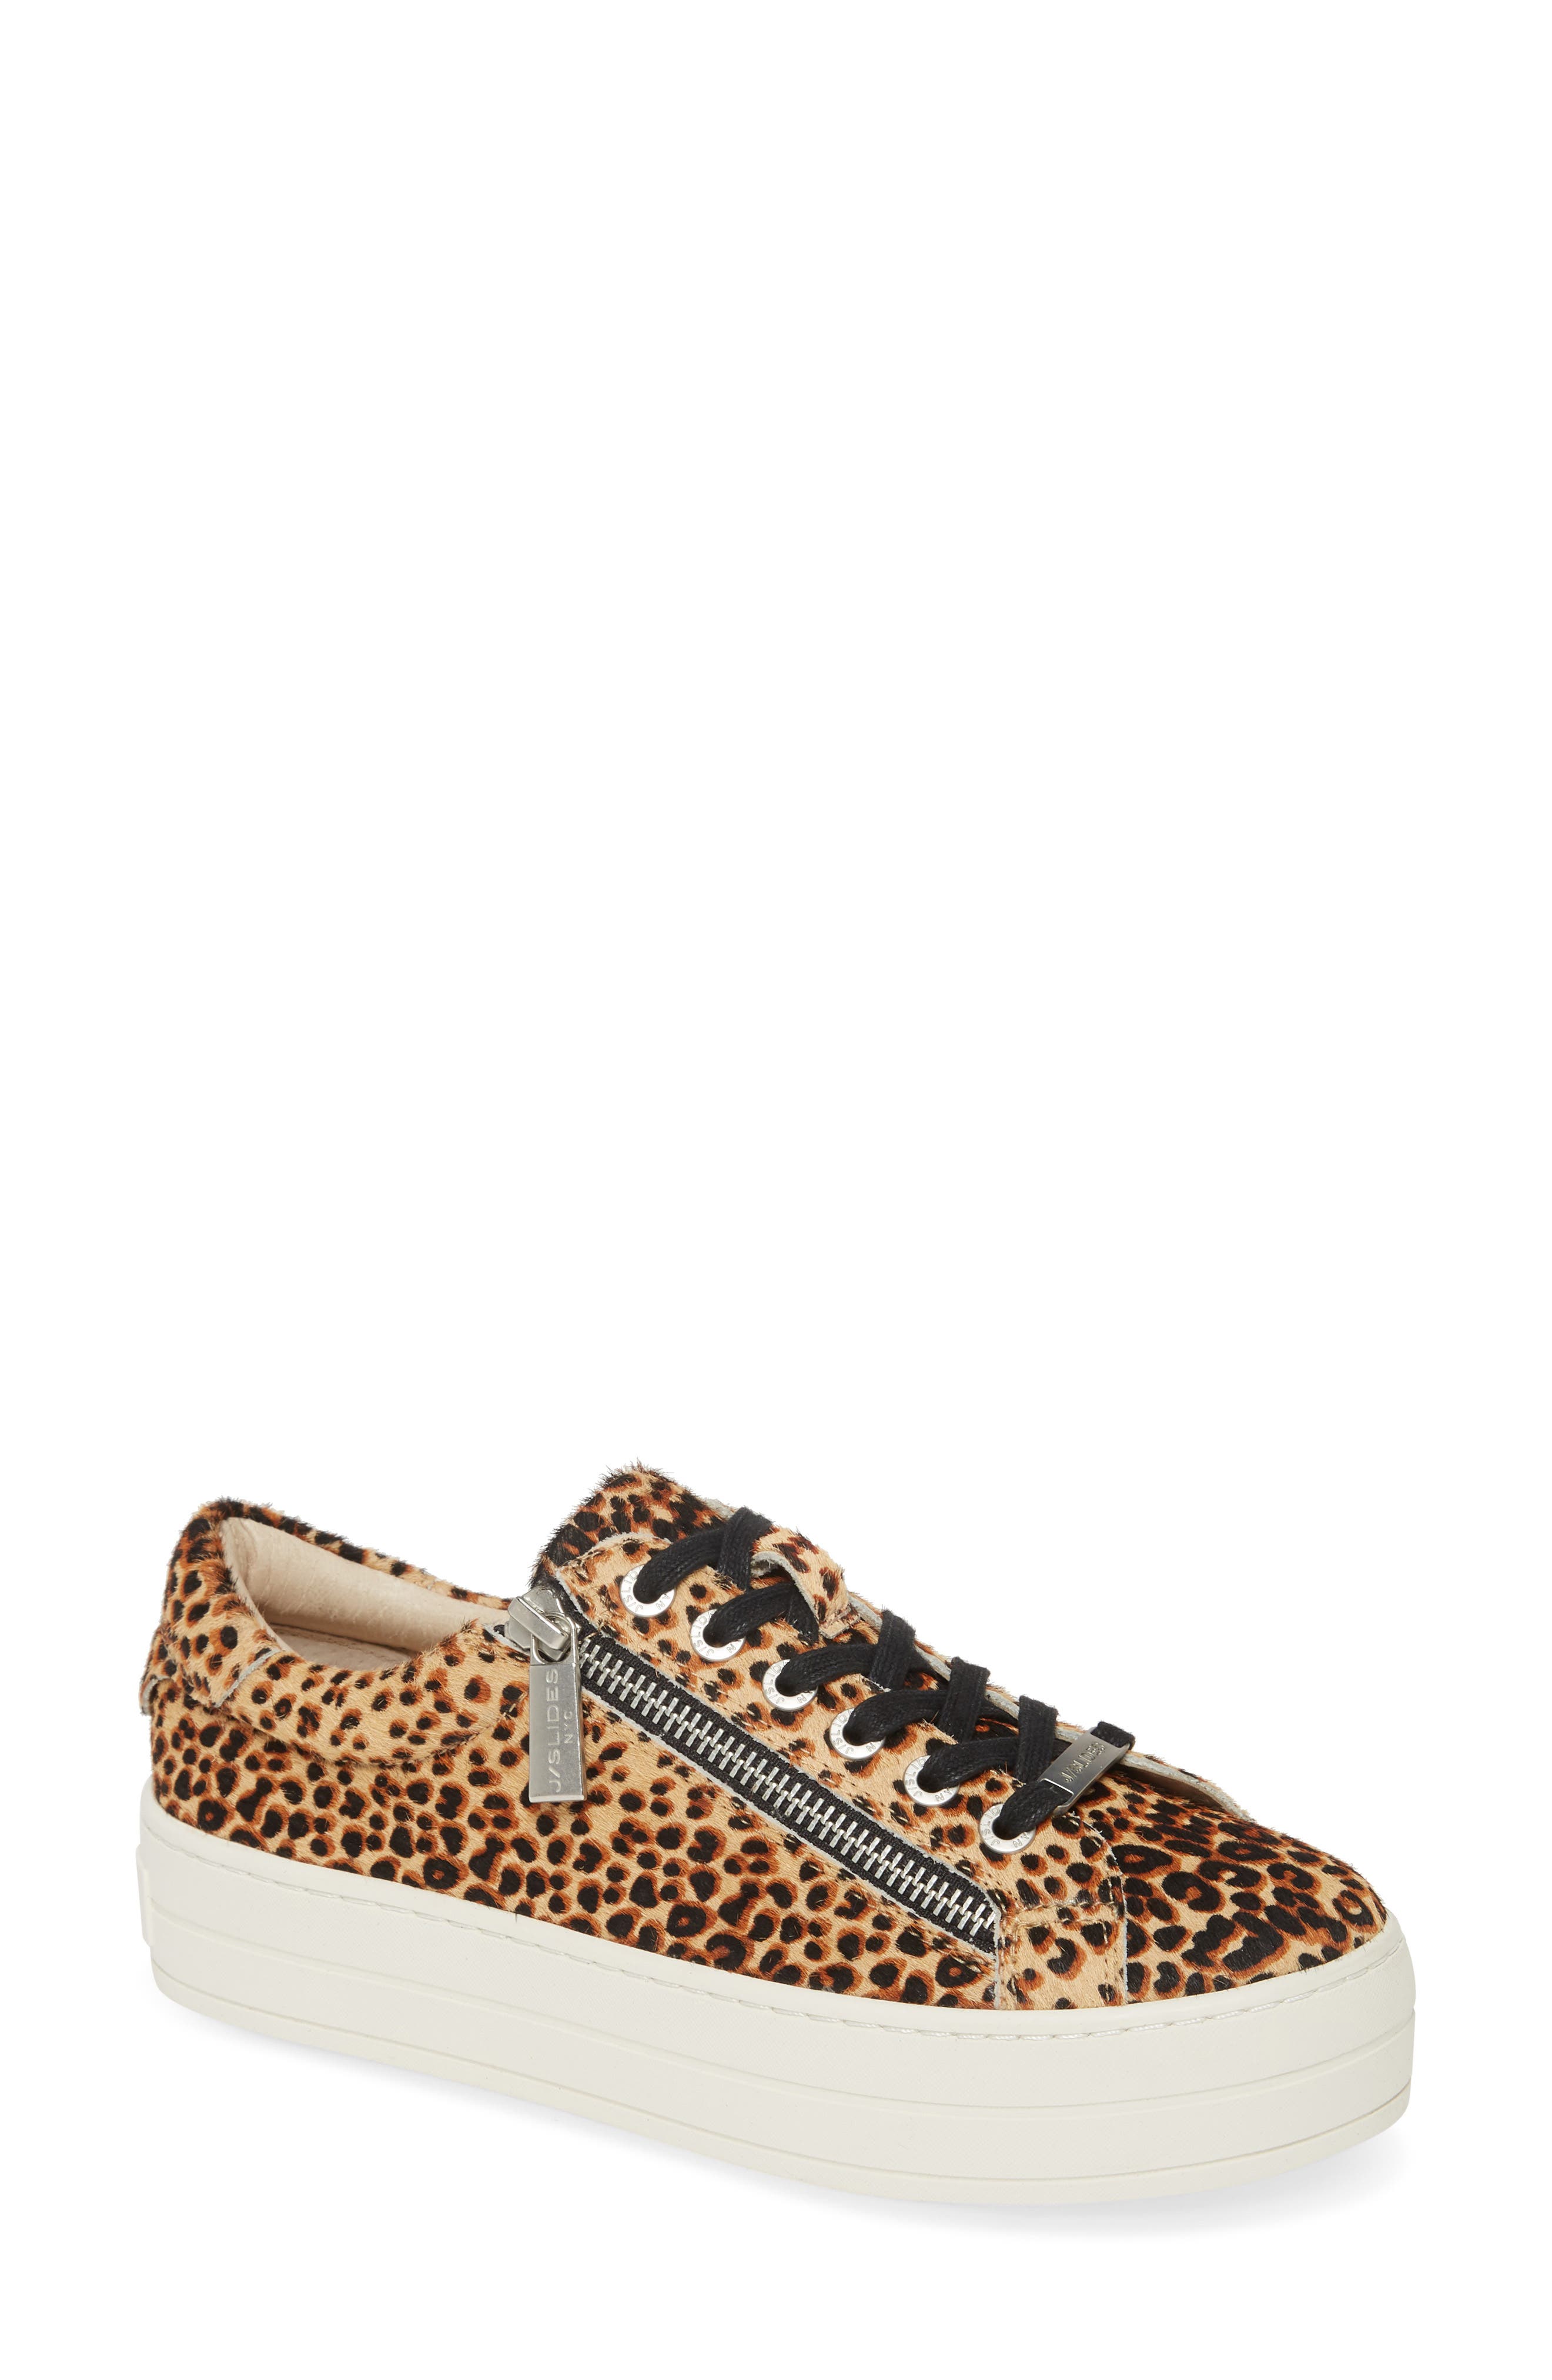 jslides leopard sneaker